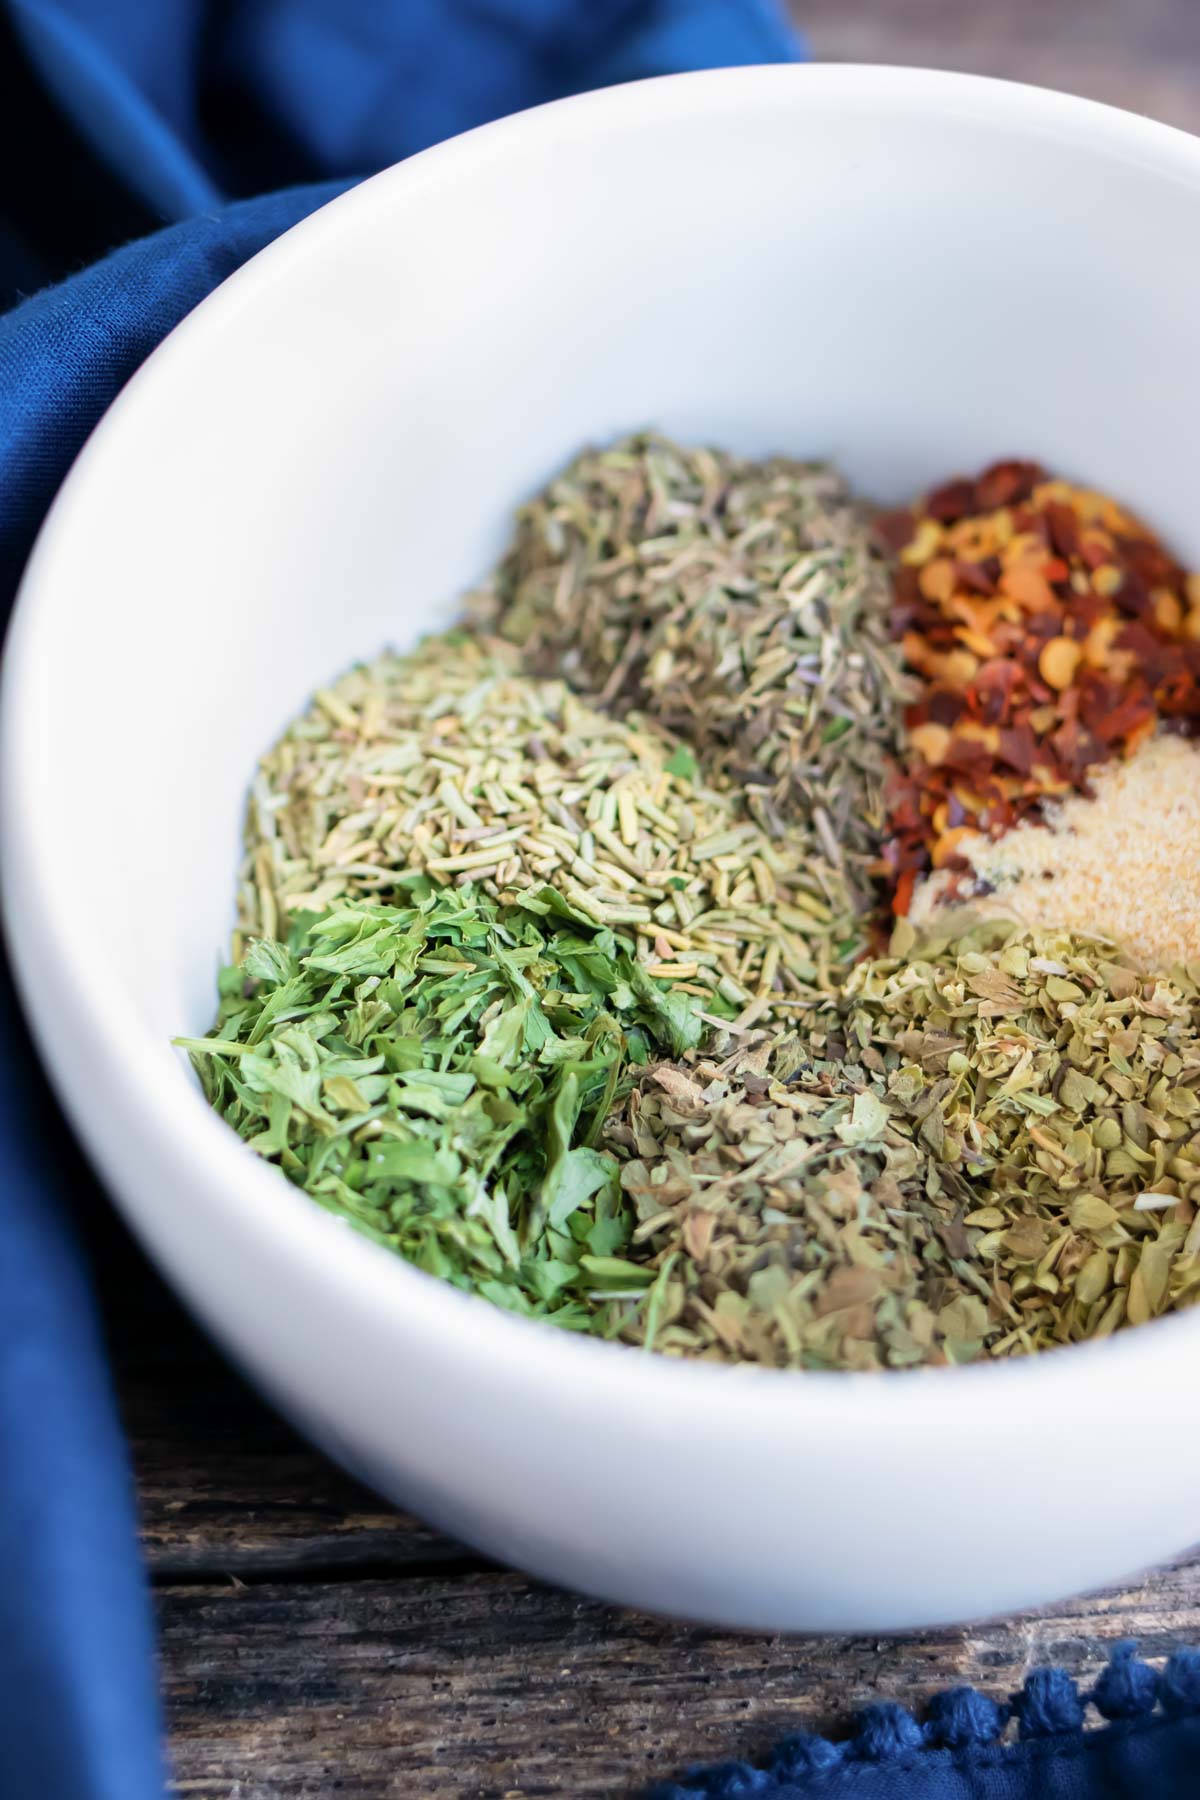 A white bowl full of dried oregano, basil, parsley, rosemary, thyme, and garlic powder for an Italian seasoning recipe.